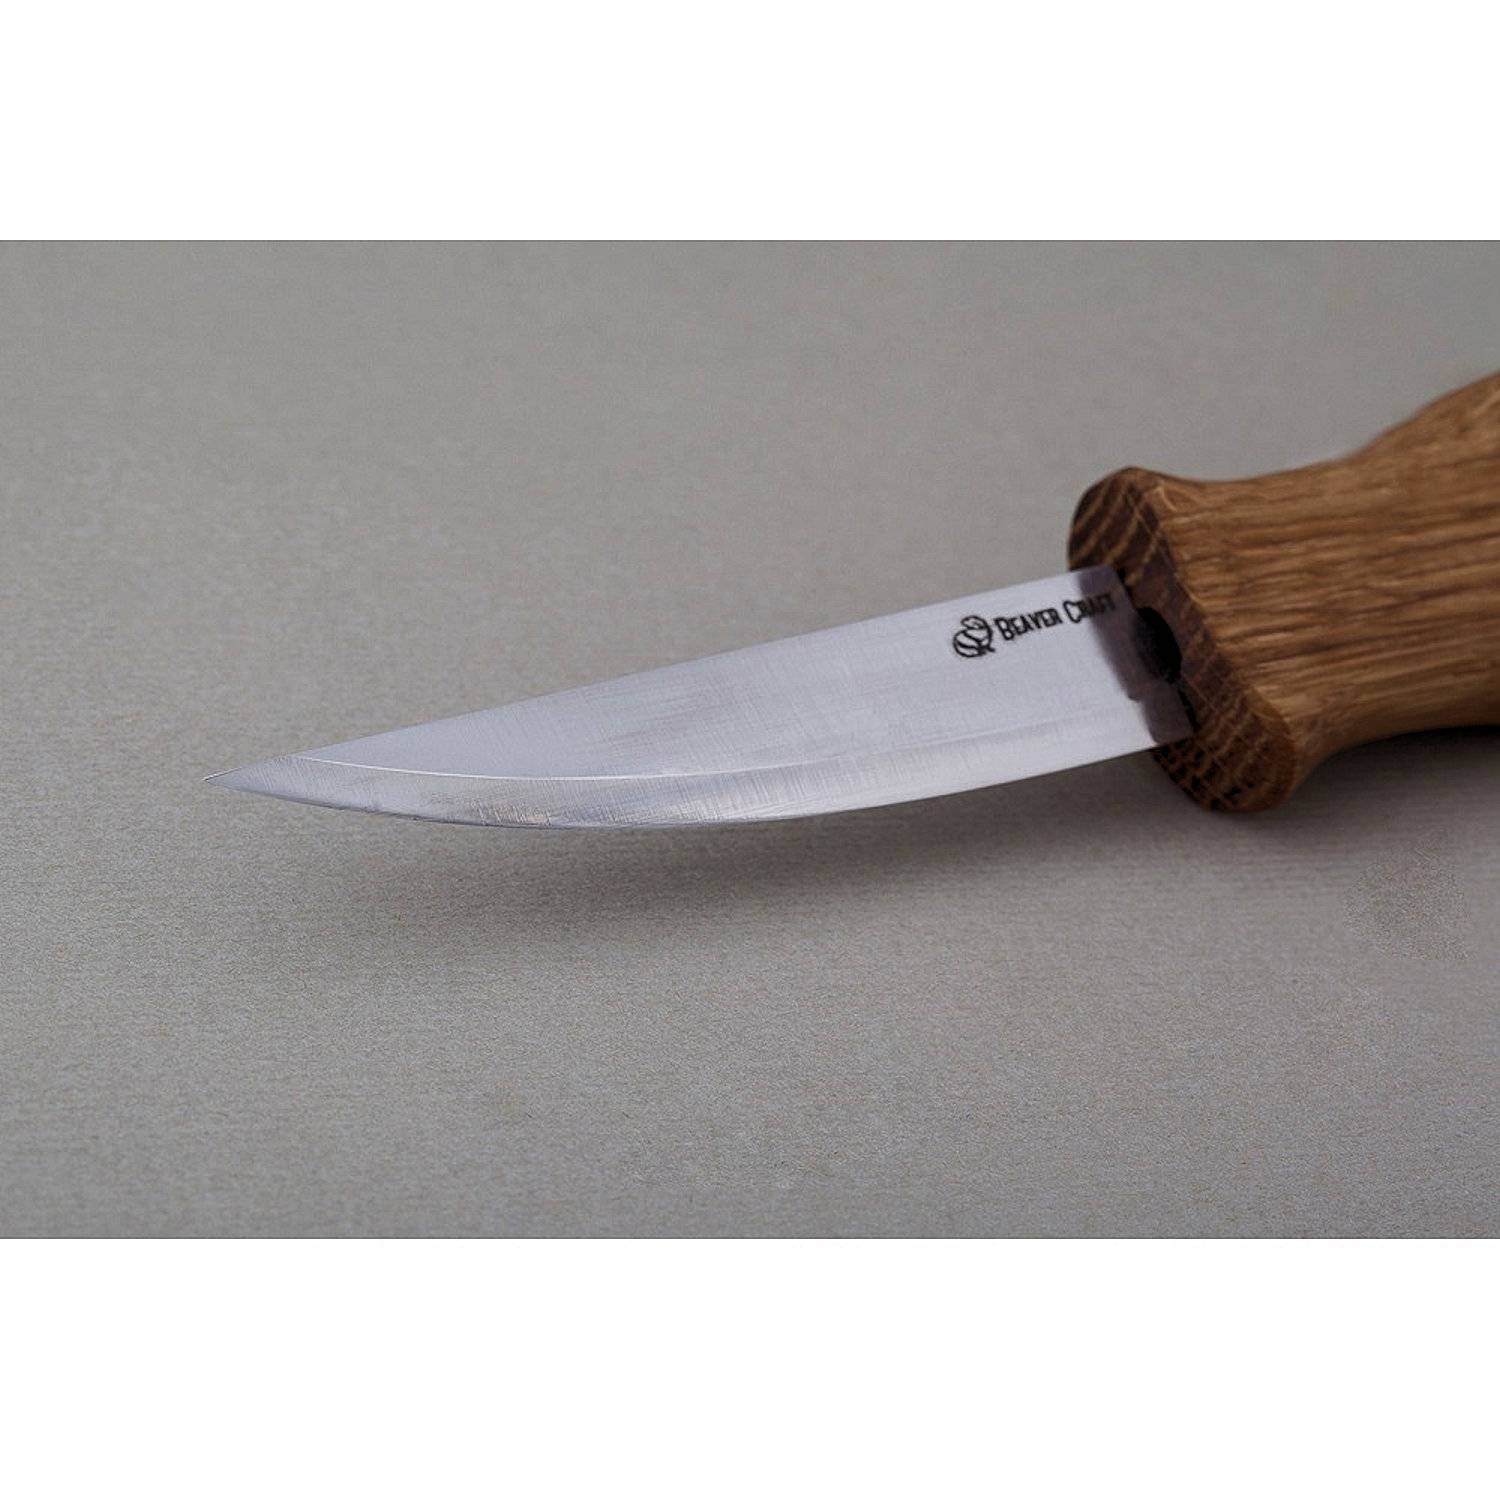 Beavercraft_C4_wood_carving_knife